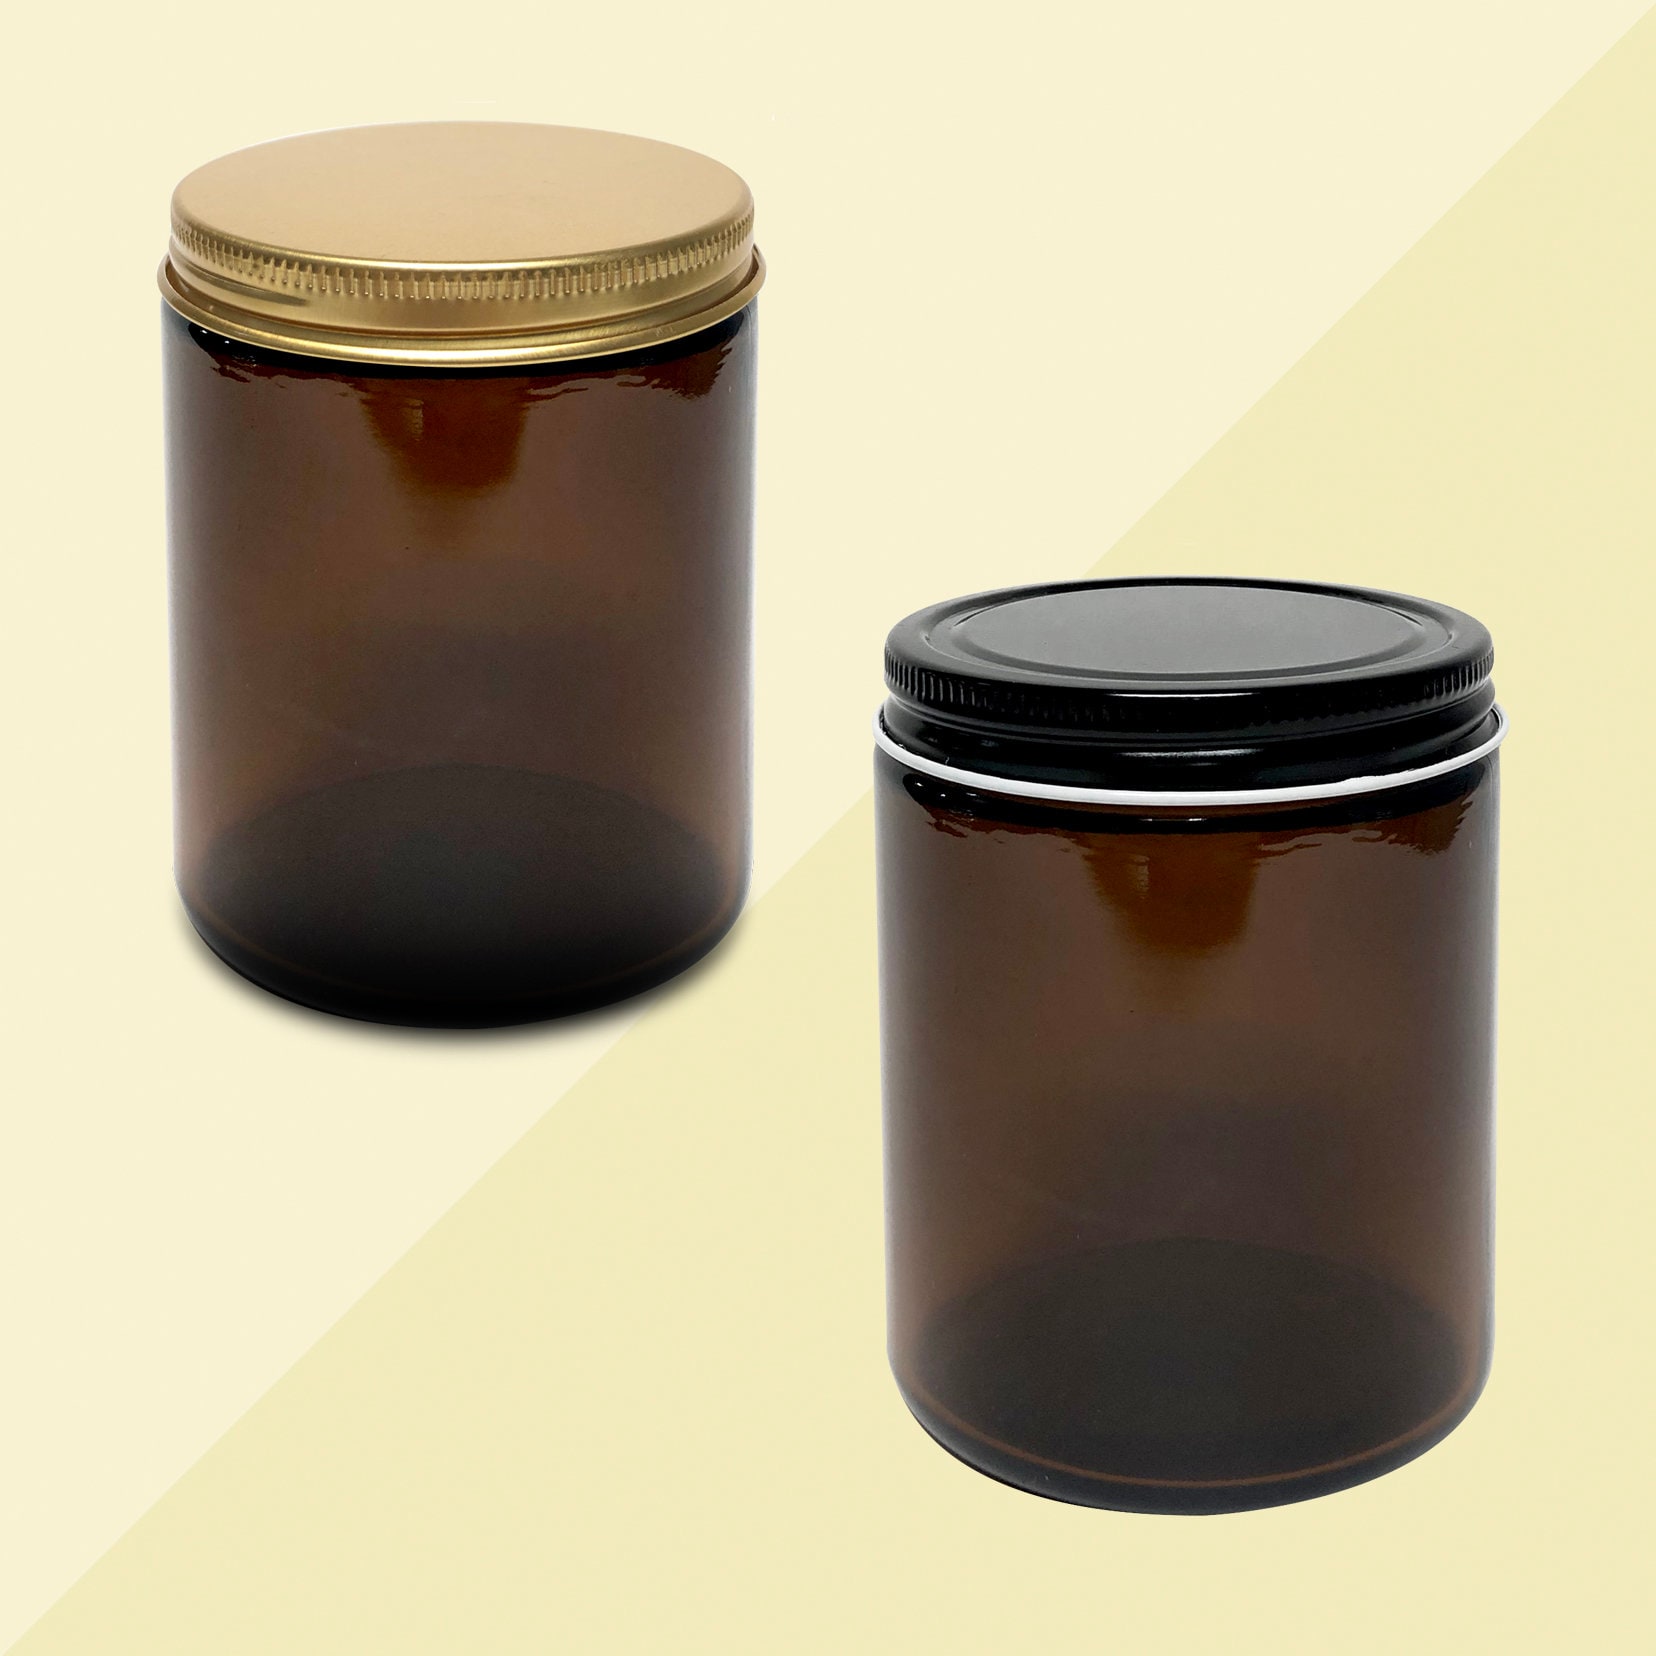 Amber Candle Jars 3.2 oz - Buy 1 Get 1